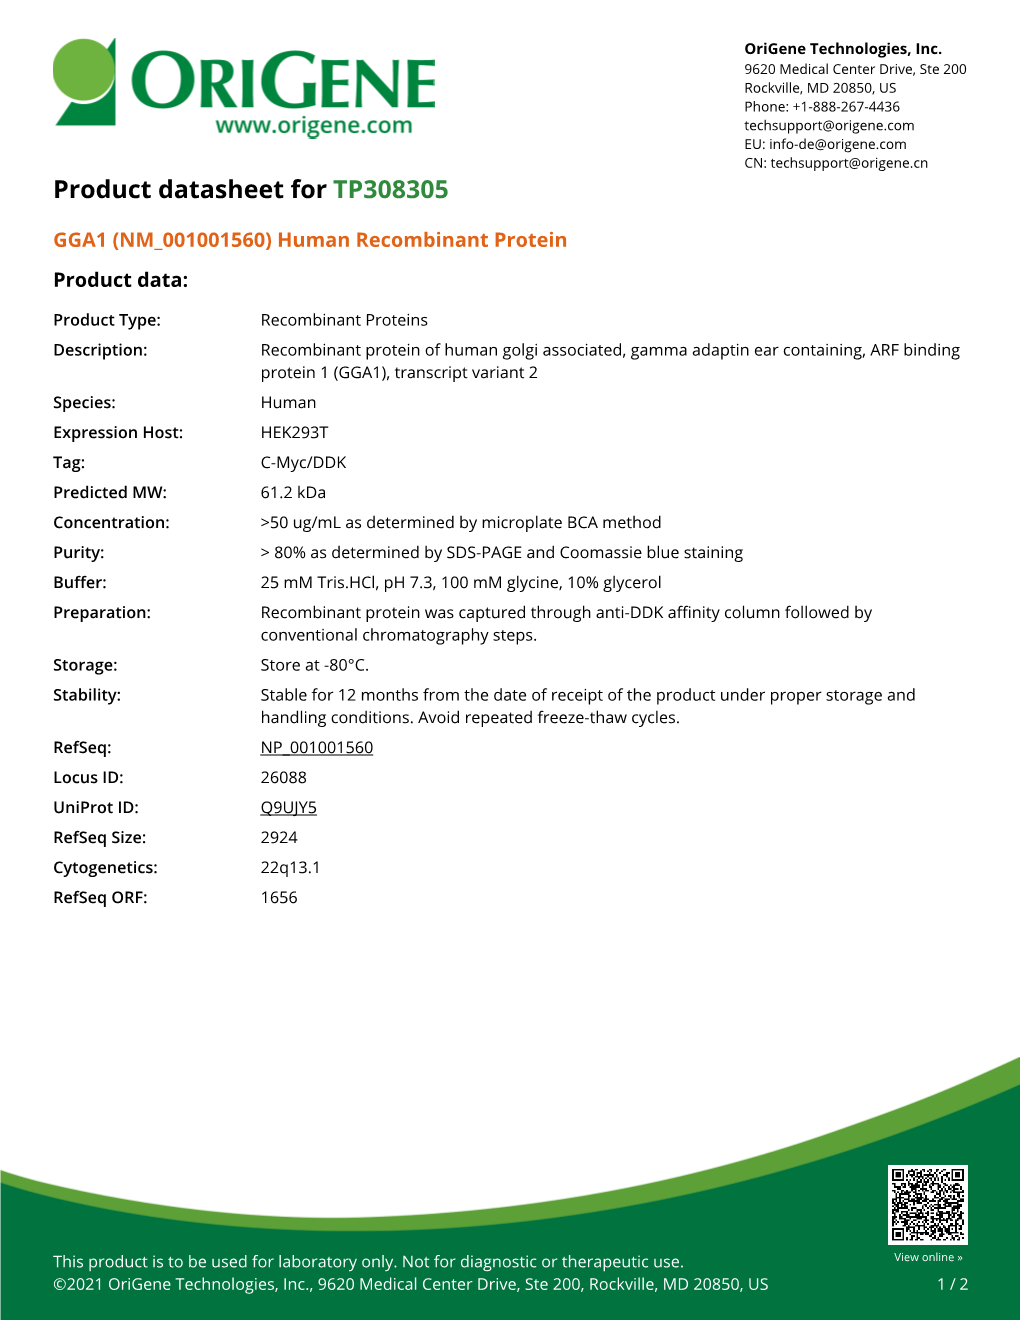 GGA1 (NM 001001560) Human Recombinant Protein Product Data